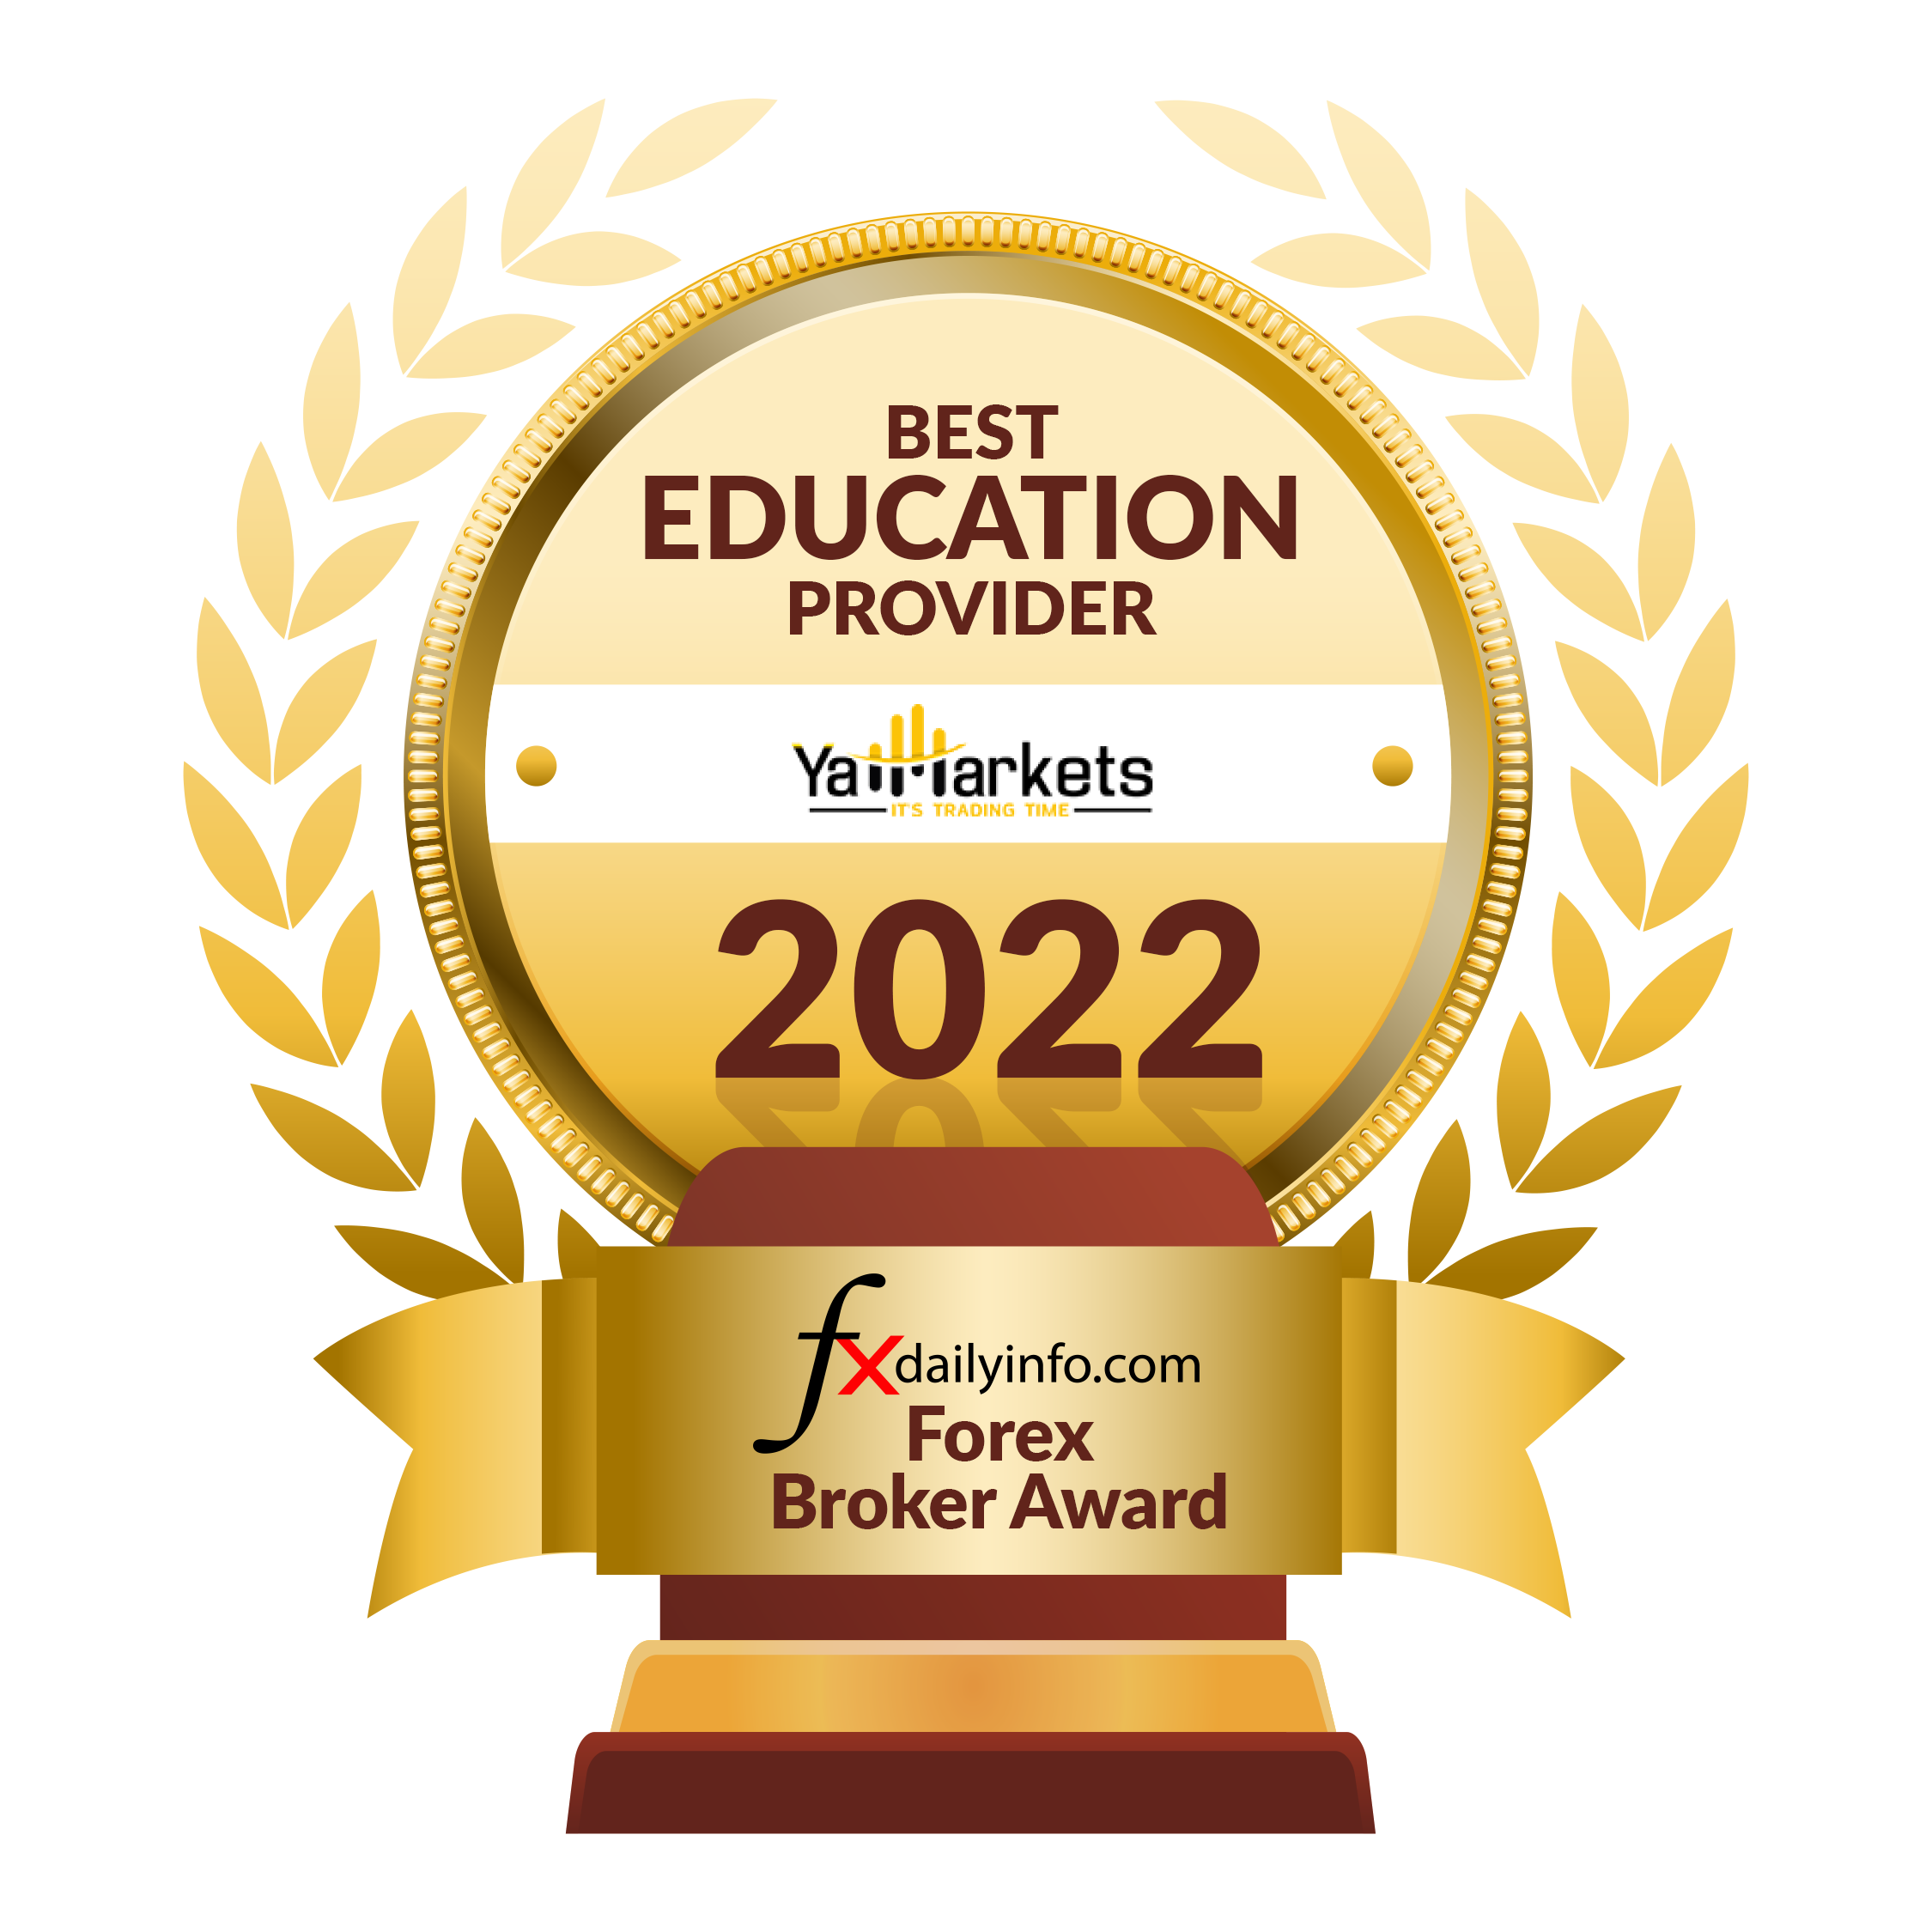 Best Education Provider 2022